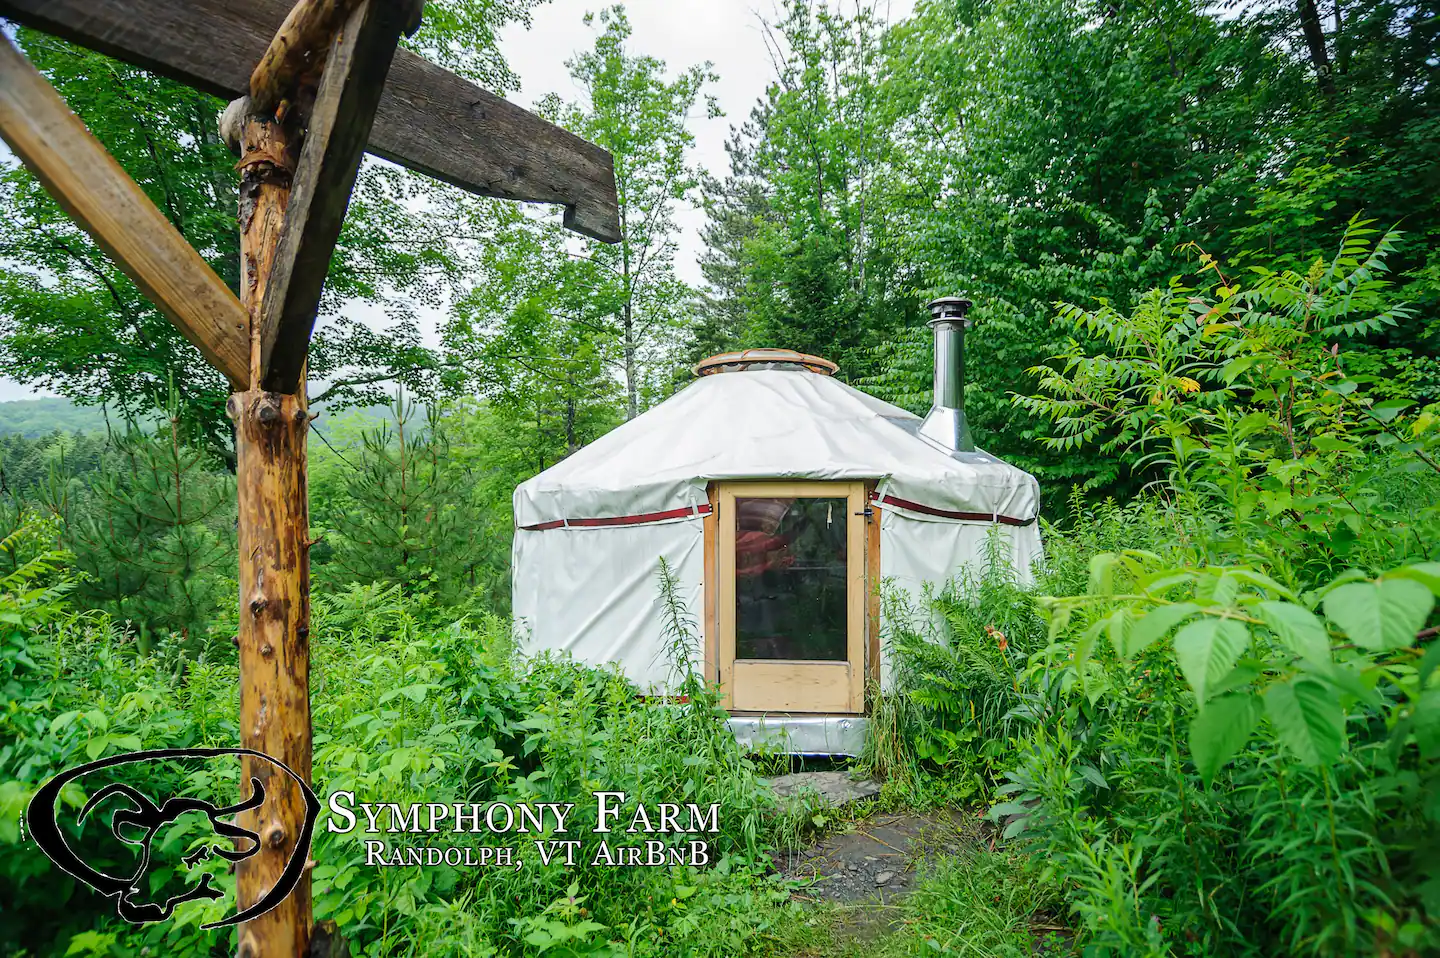 The Symphony Farm Yurt